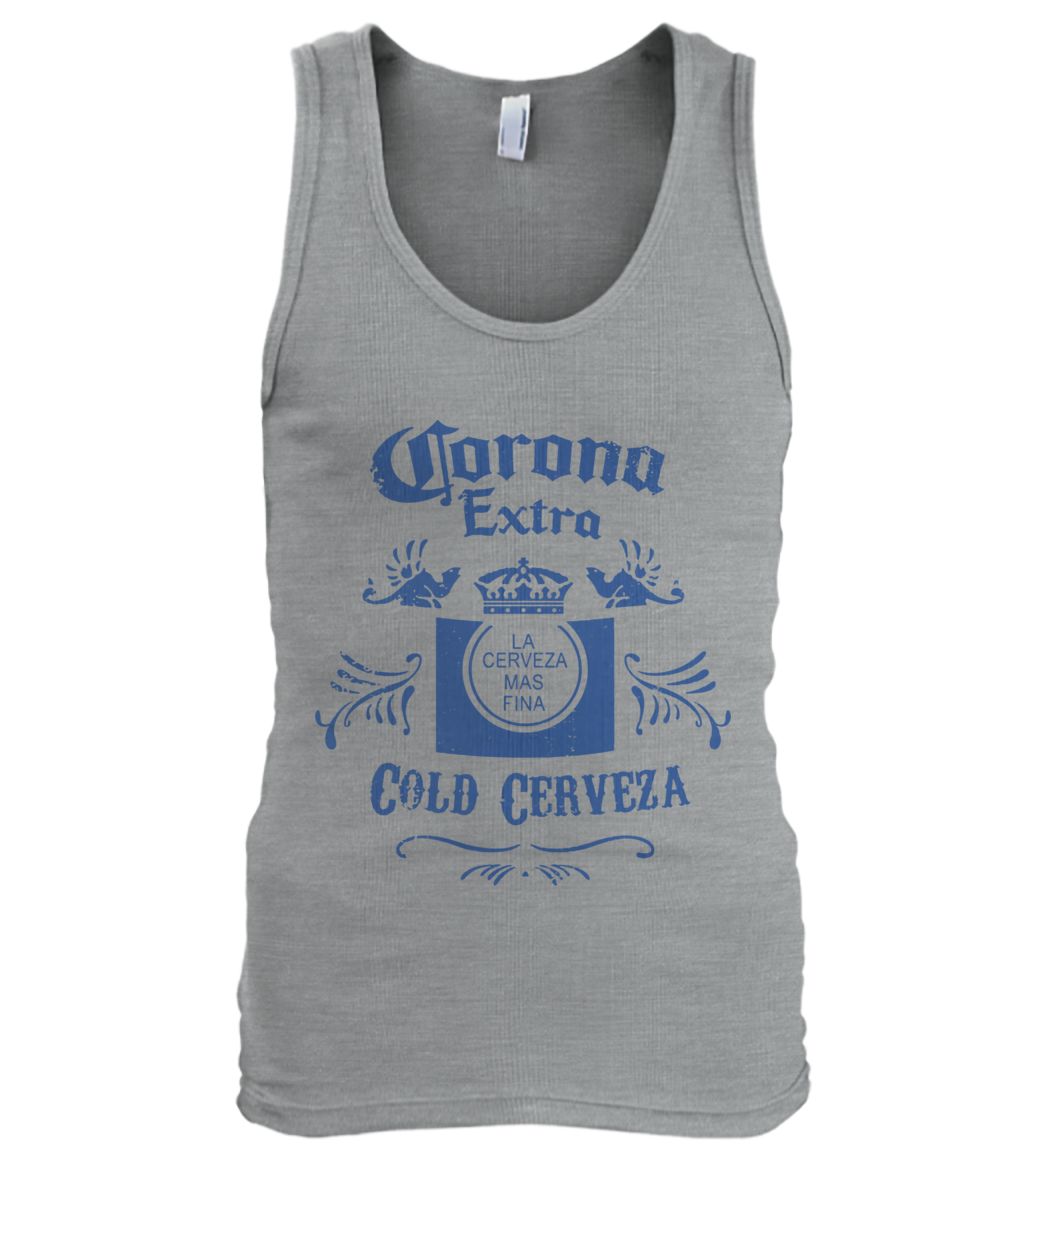 Corona extra cold cerveza men's tank top